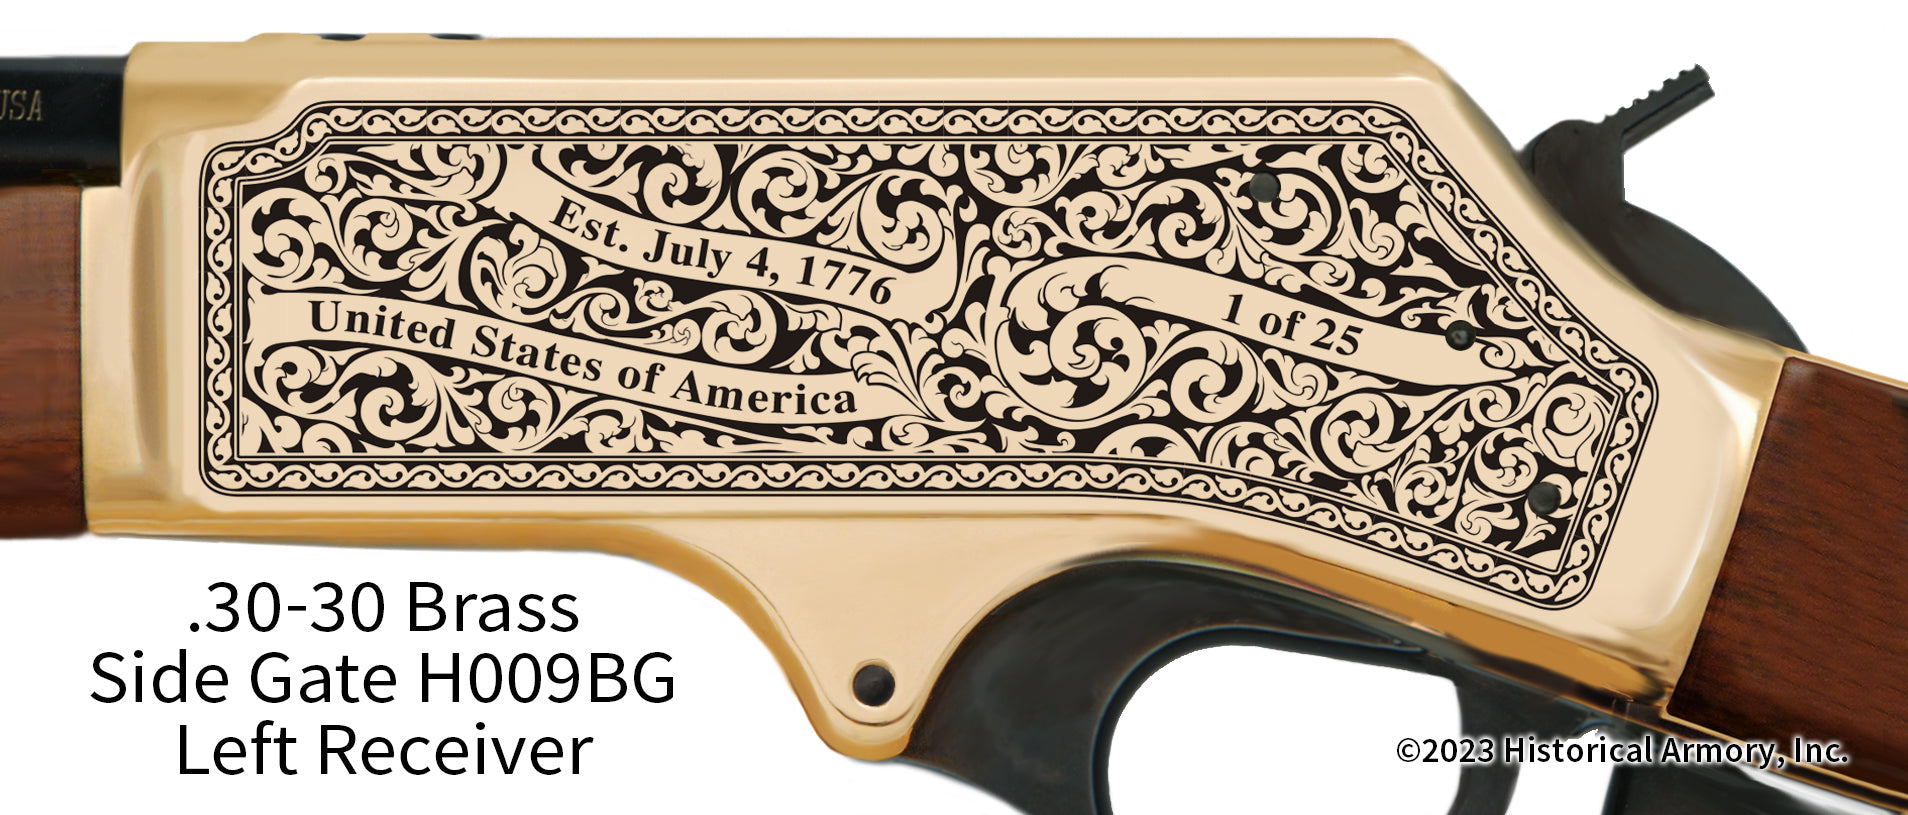 Benton County Washington Engraved Henry .30-30 Brass Side Gate Rifle